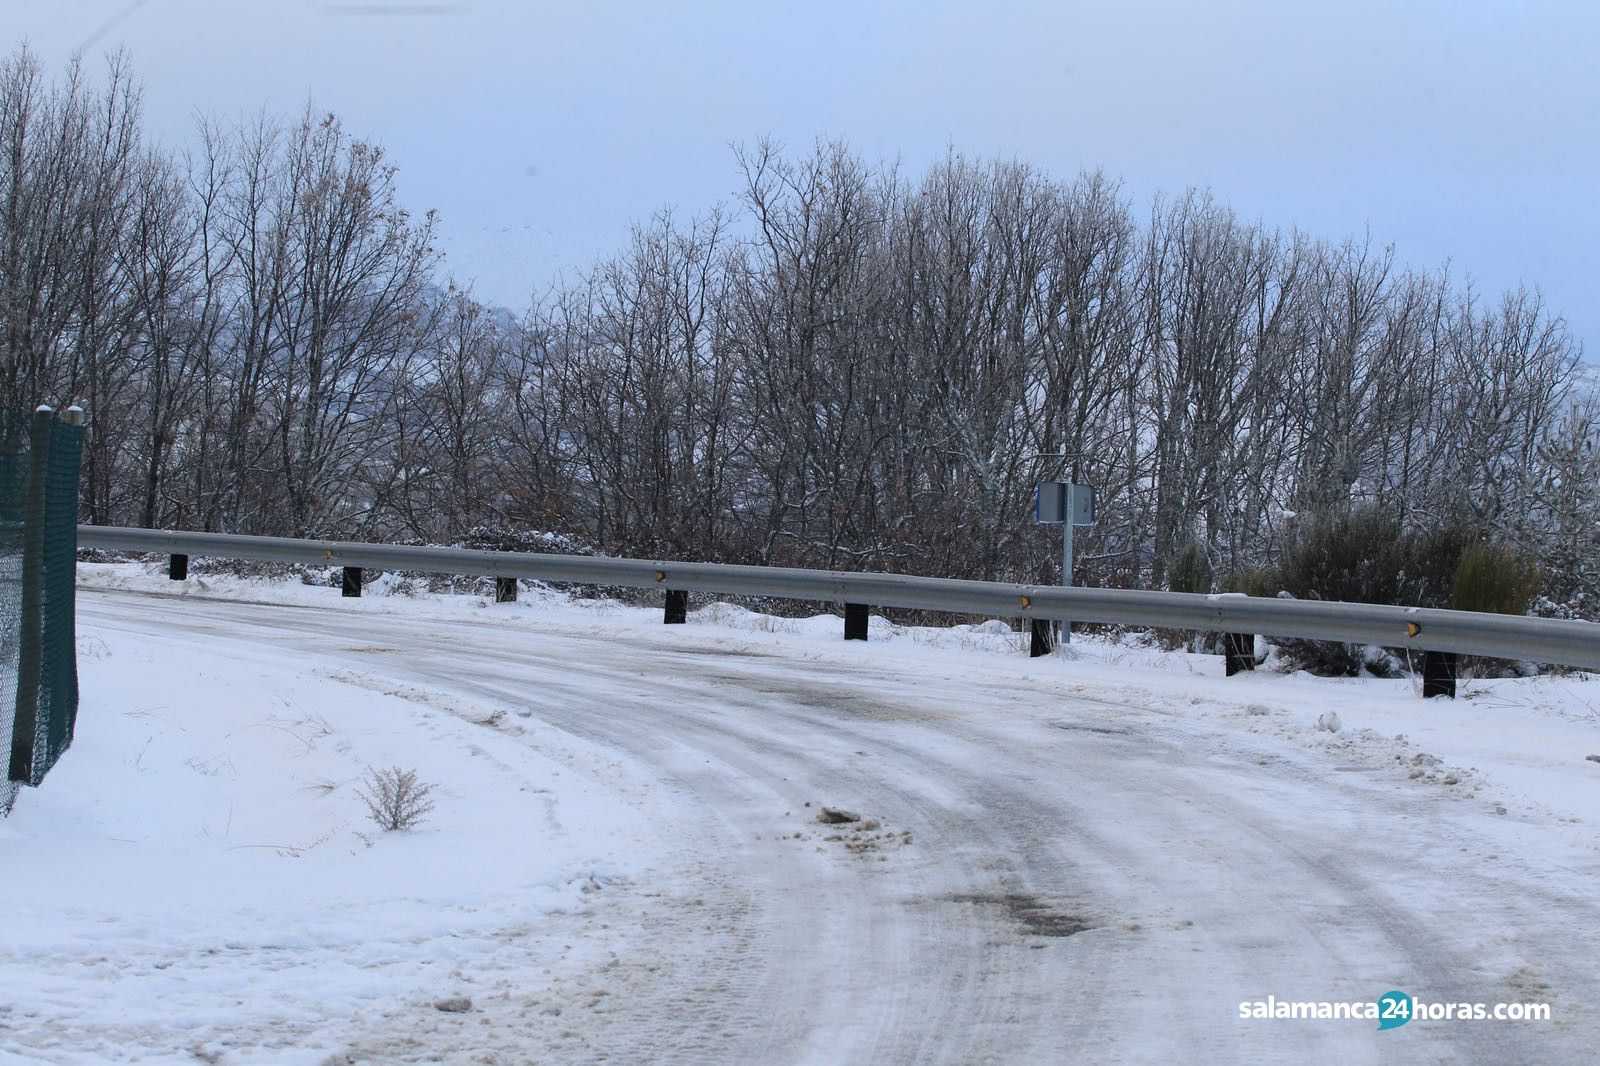  Carretera hielo nieve acceso covatilla (8) 